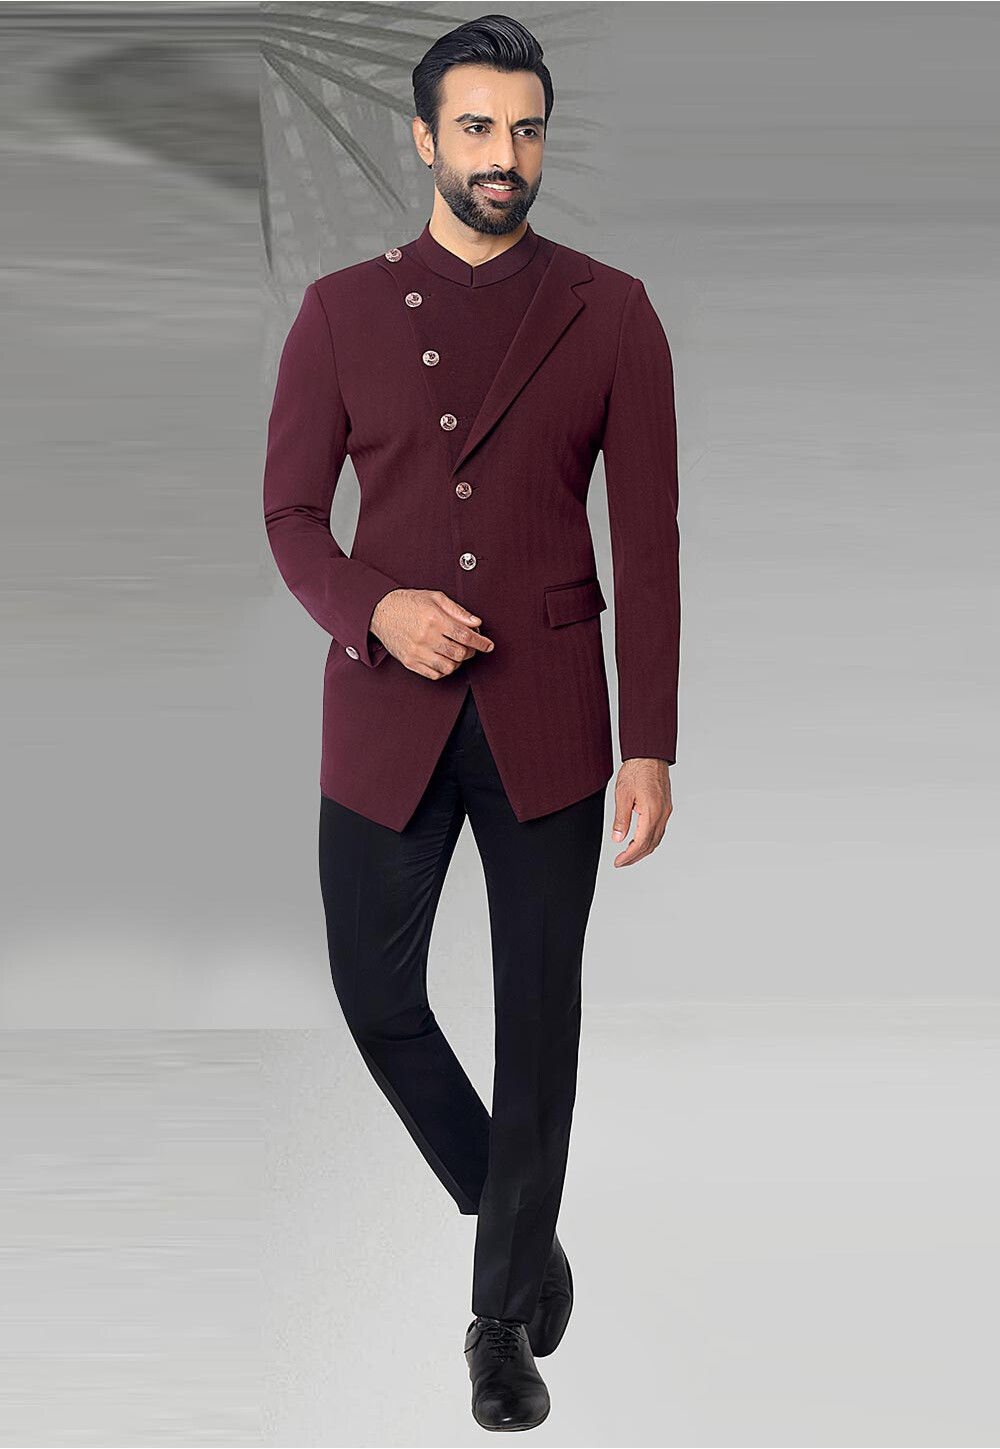 Buy Blue and Maroon Floral Jodhpuri Suit Online @Manyavar - Suit Set for Men